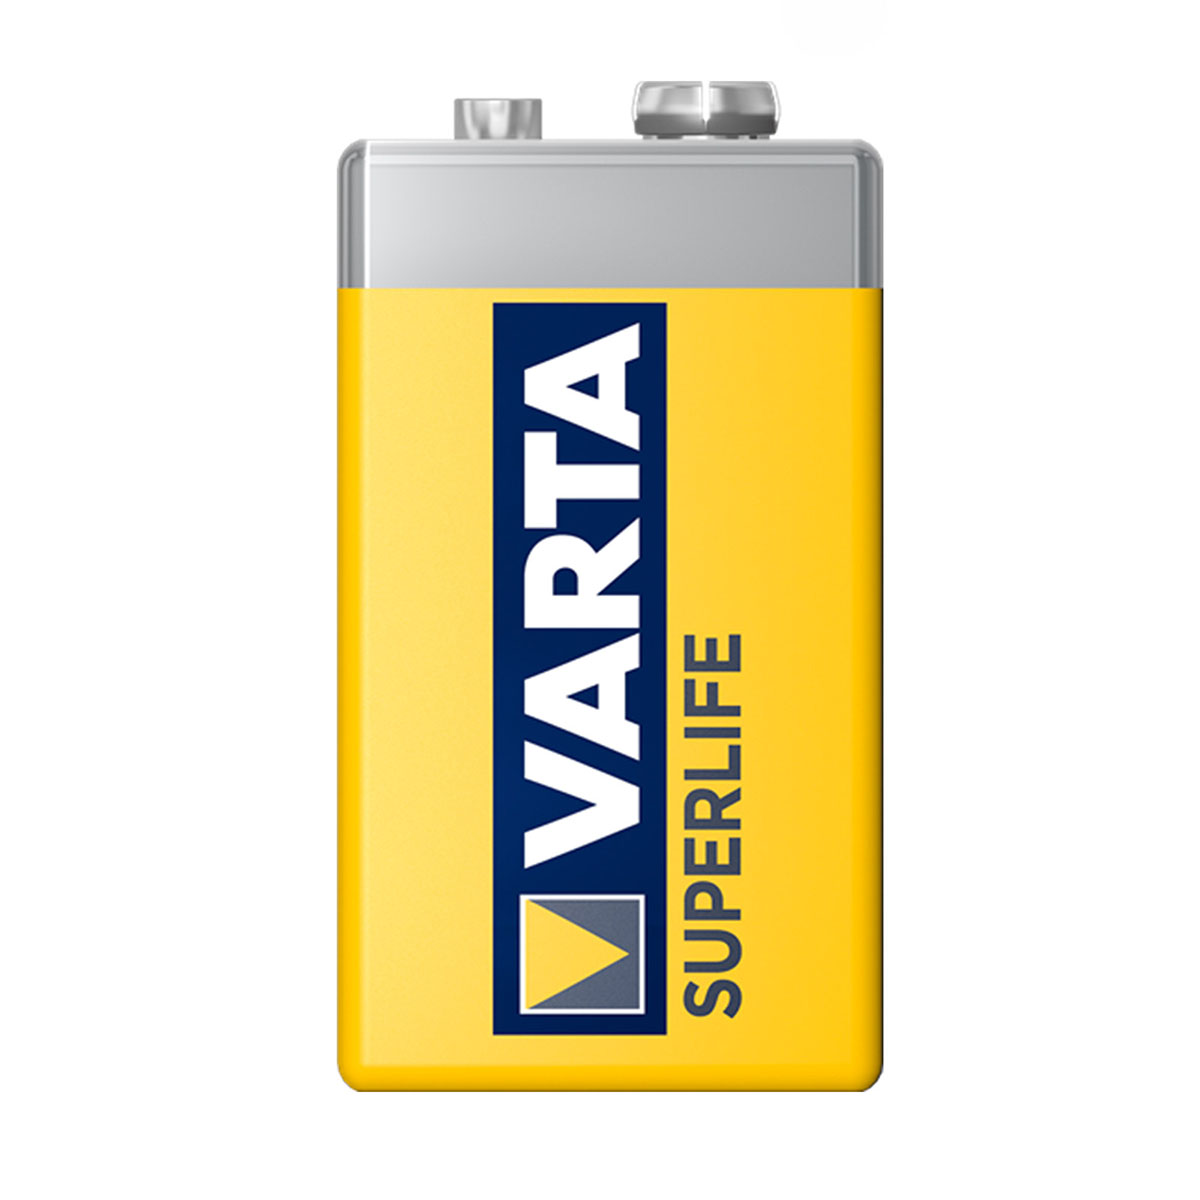 Батарейка VARTA SUPER LIFE (SUPER HEAVY DUTY) 9V BL-1 6LR61/6LF22 (2022) (1/10/50) ZINC-CARBON